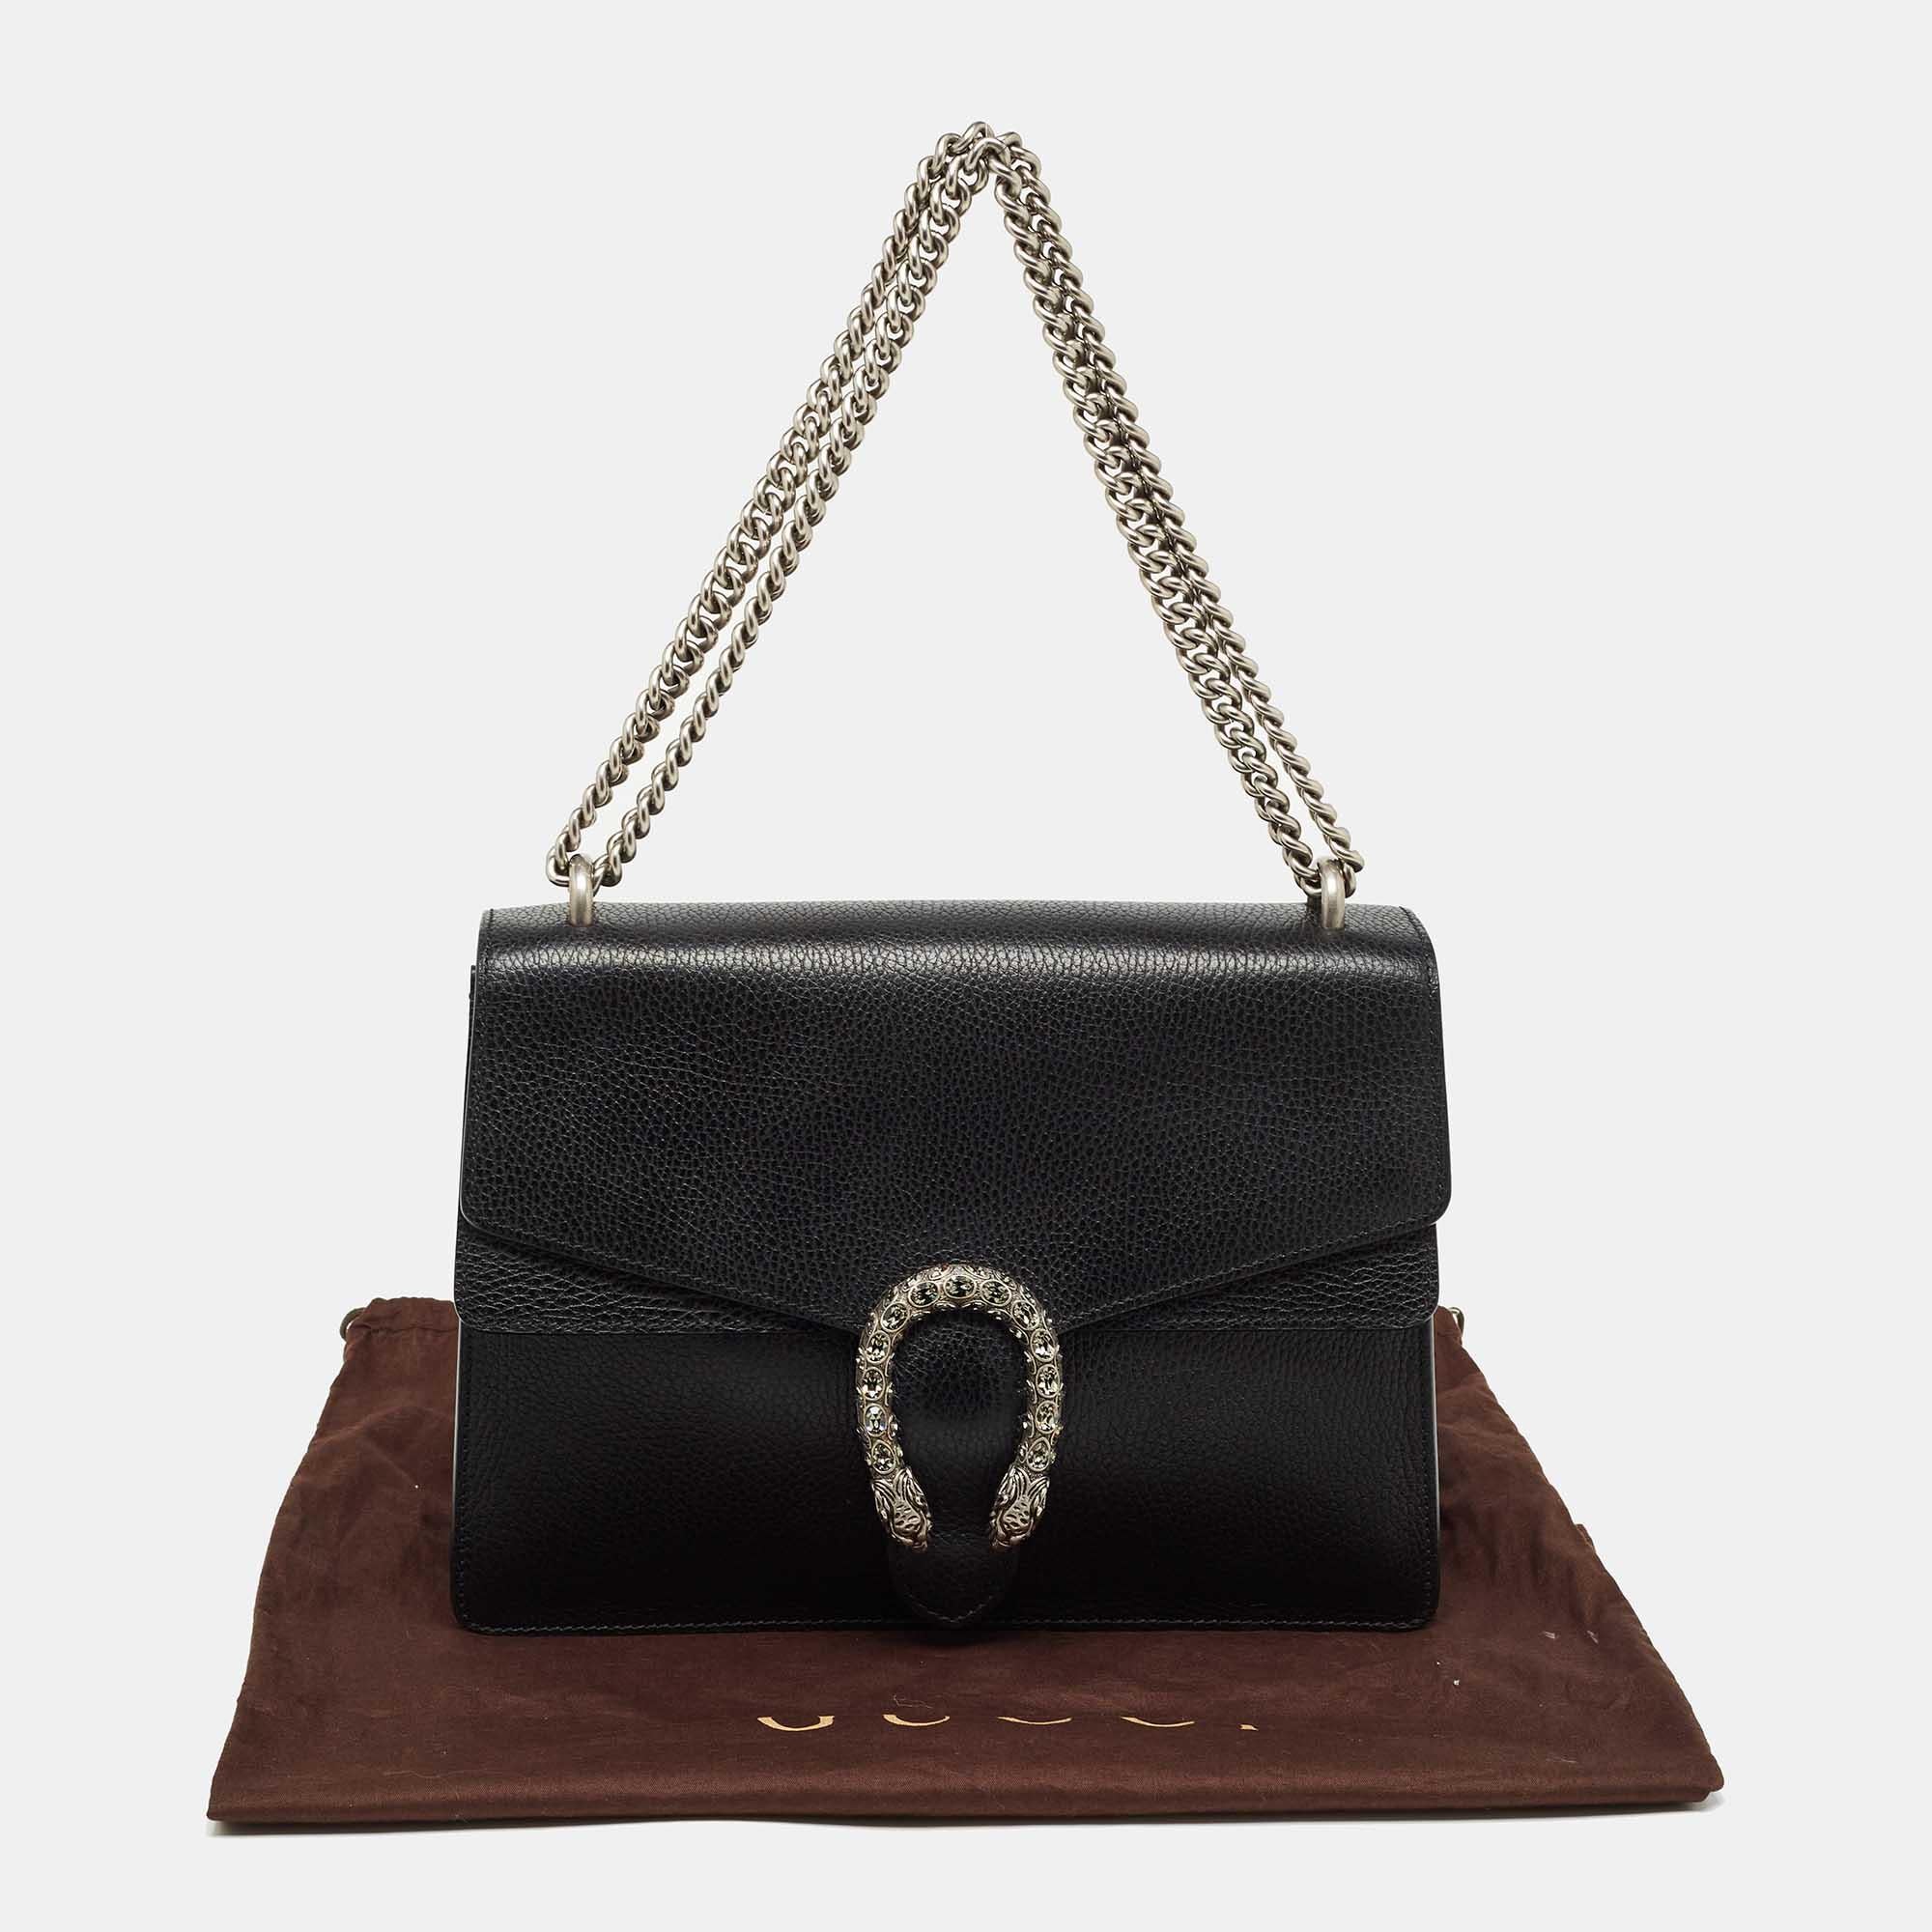 Gucci Black Leather Medium Dionysus Shoulder Bag 2